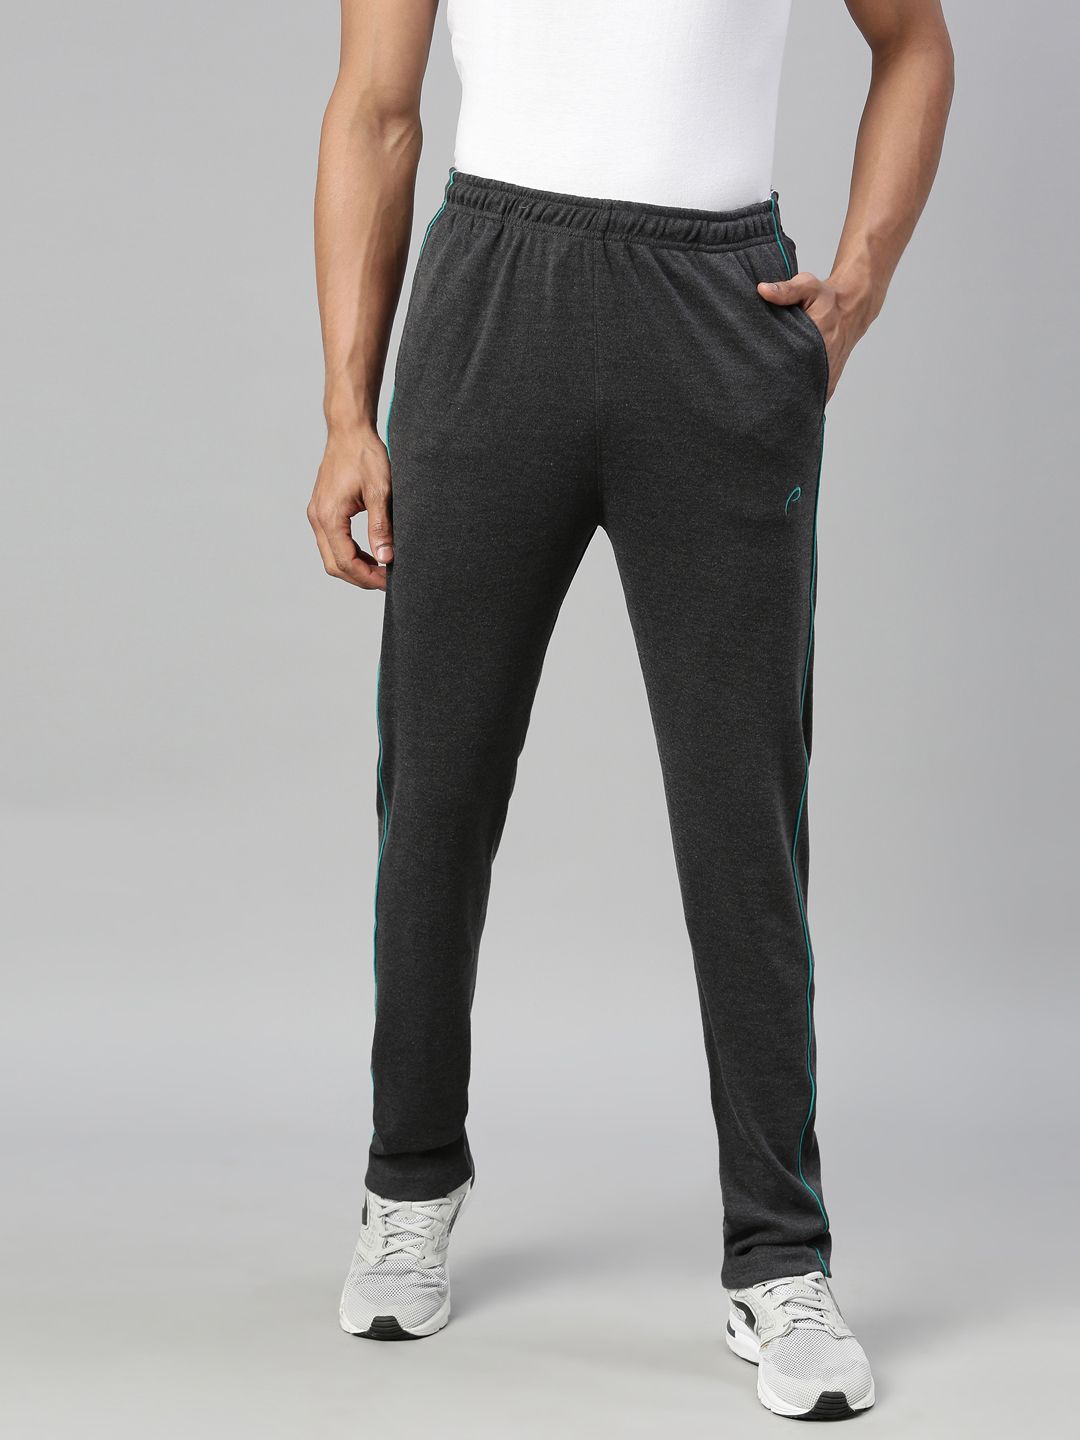 Yievot Mens Track Pants Clearance Solid Sweatpants Suitable For Running  Workout Jogging Fashion Baggy Hip-Hop Pants Black M - Walmart.com